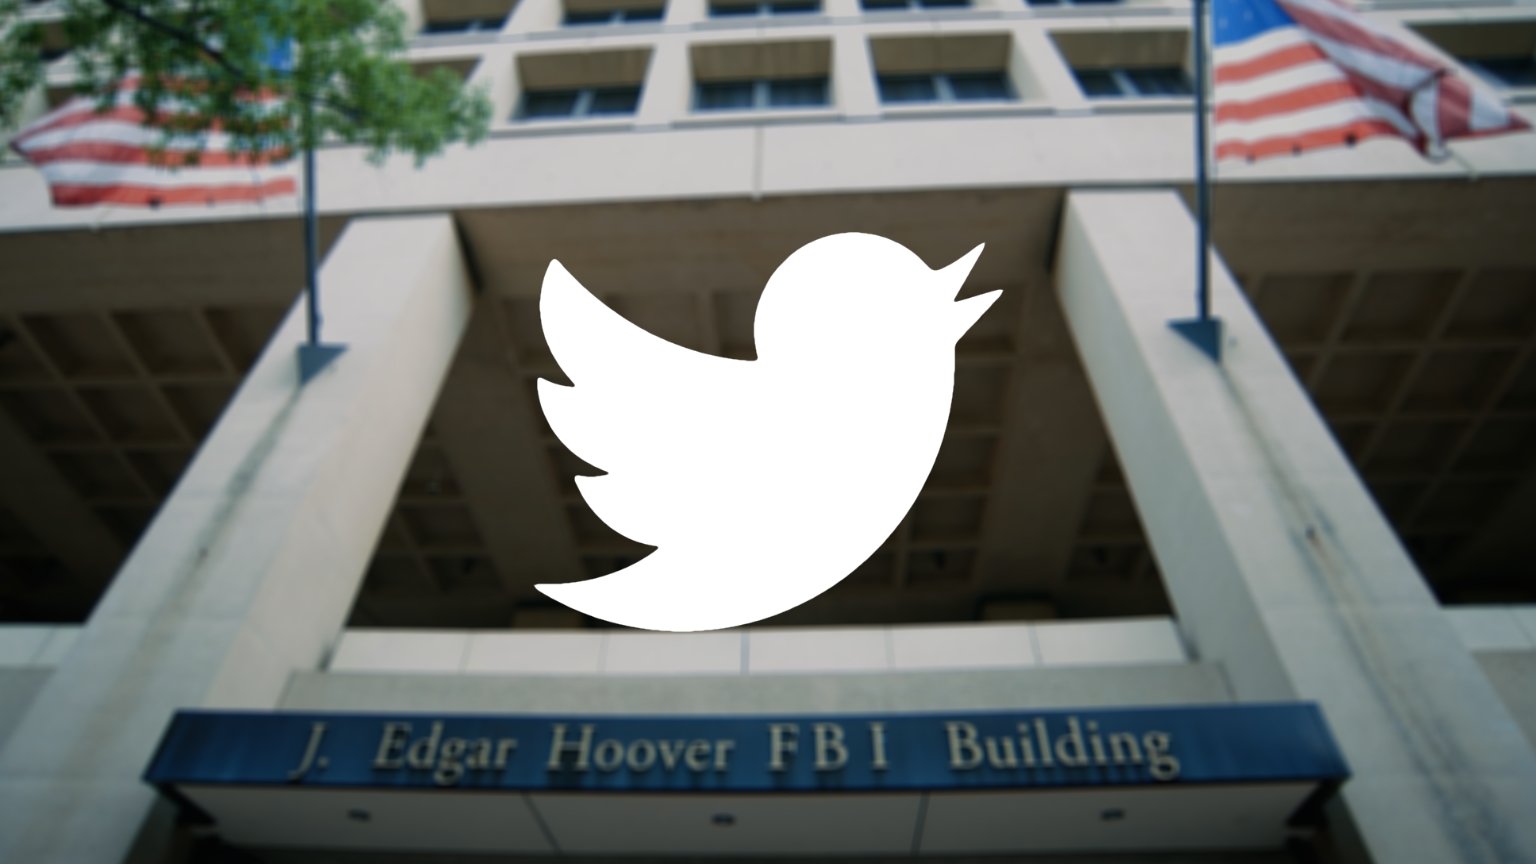 Even former Twitter censor expressed discomfort with FBI demands